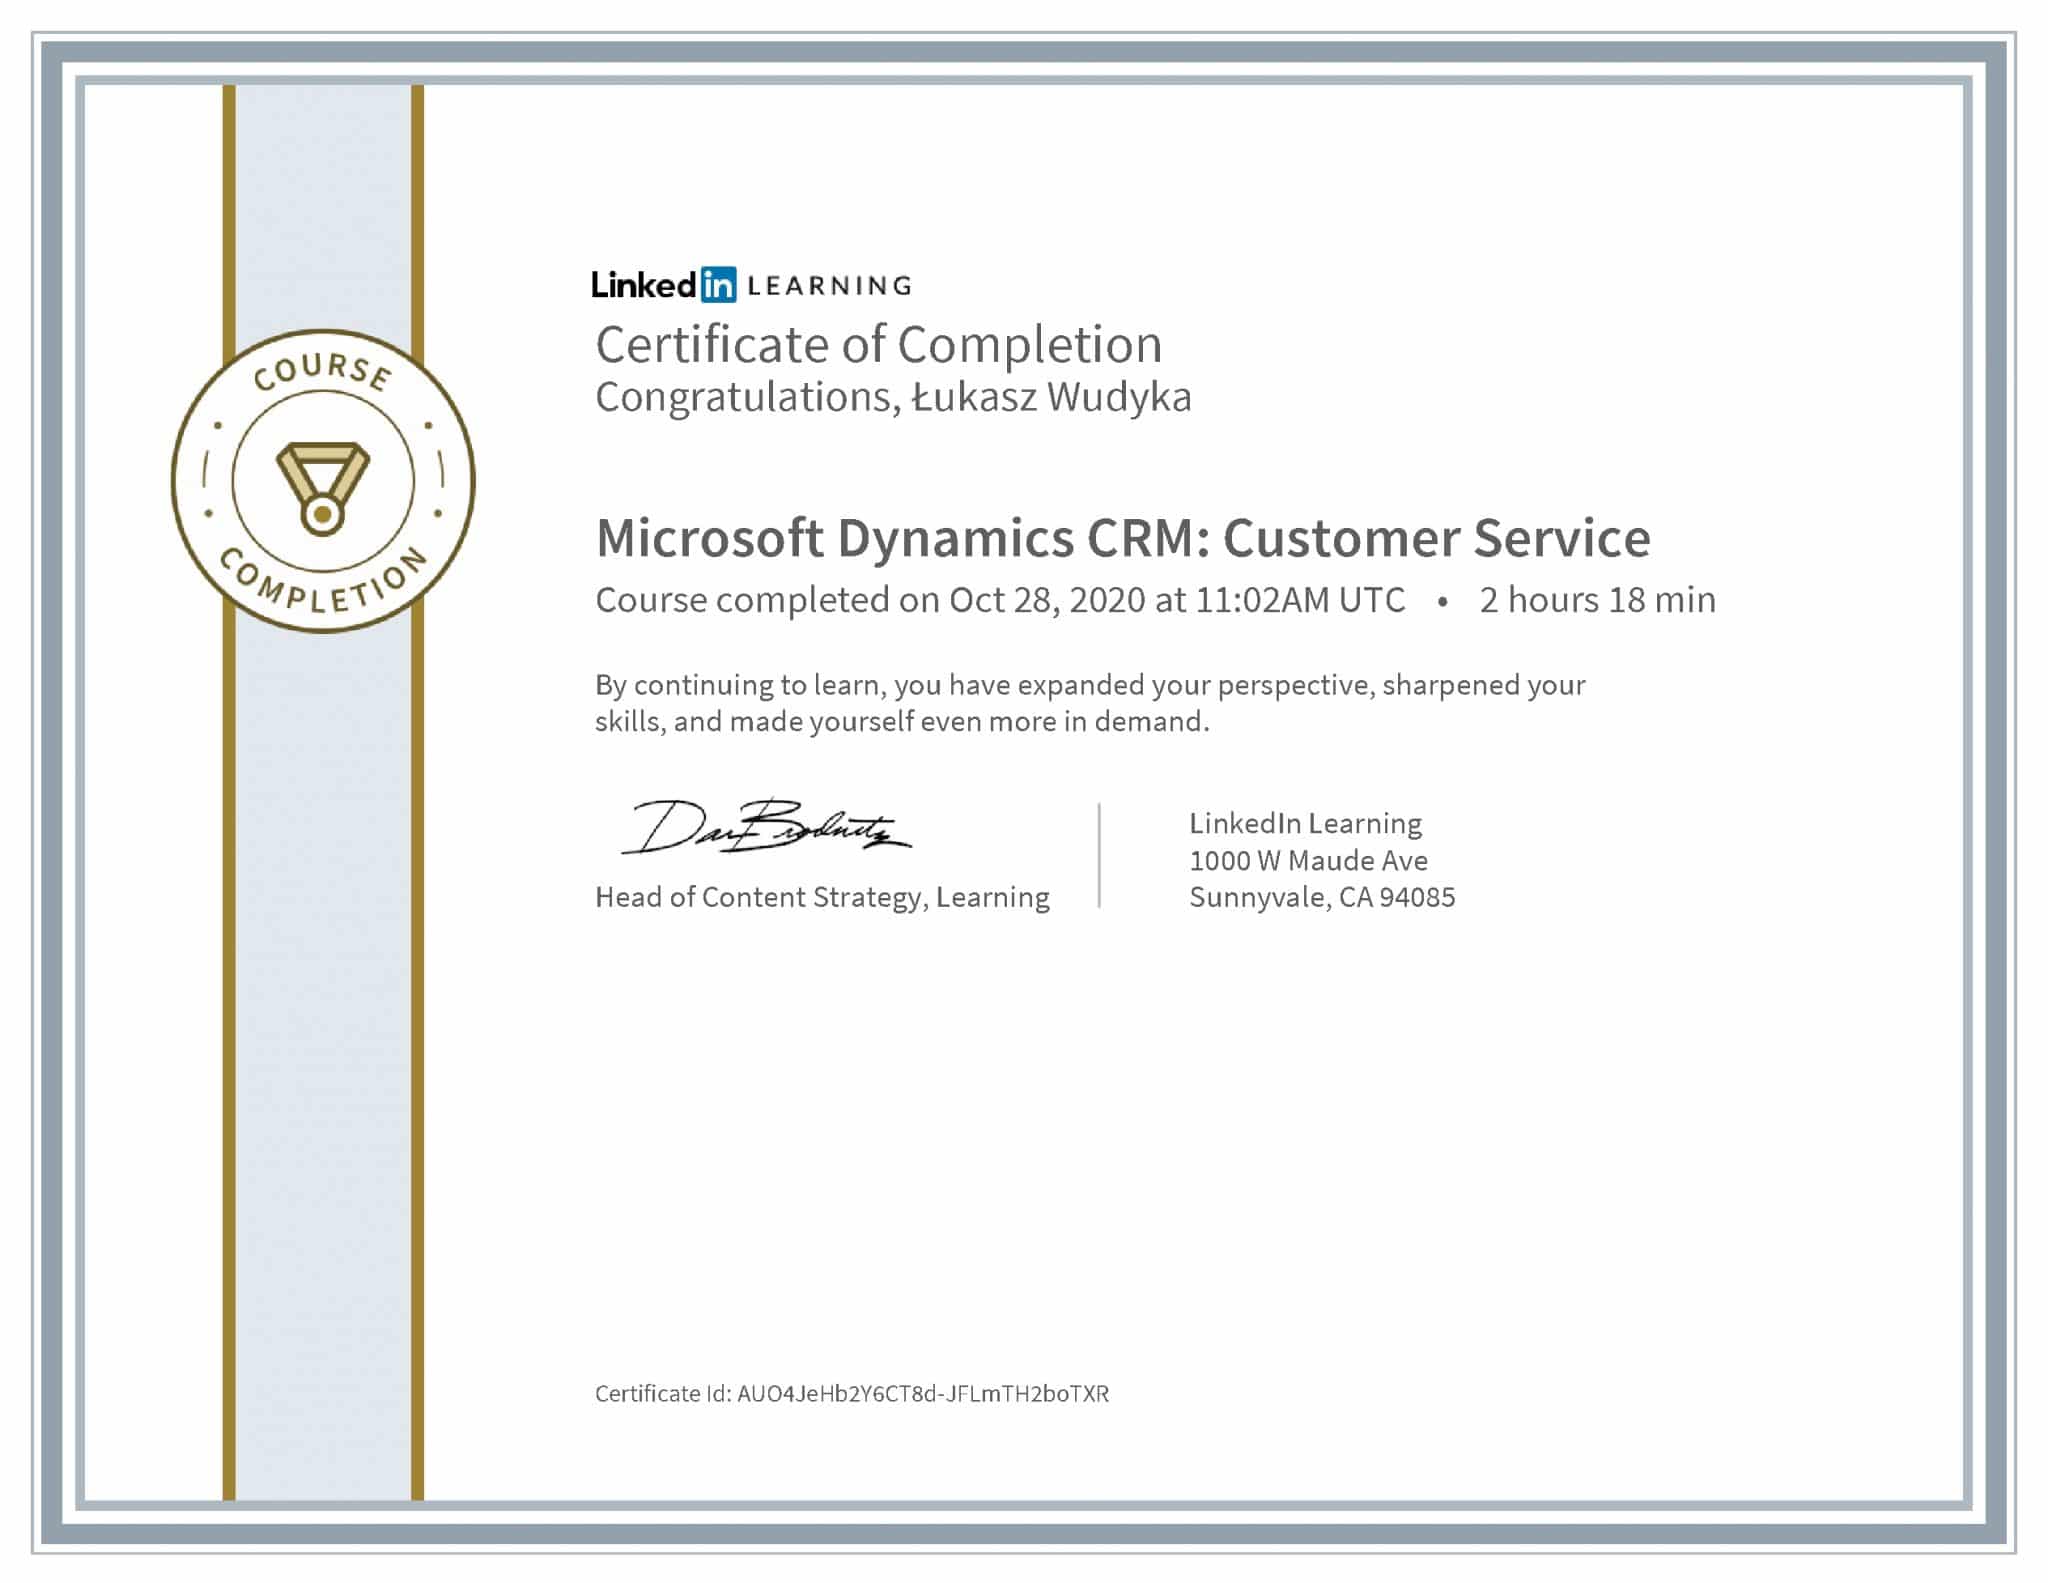 Łukasz Wudyka certyfikat LinkedIn Microsoft Dynamics CRM: Customer Service